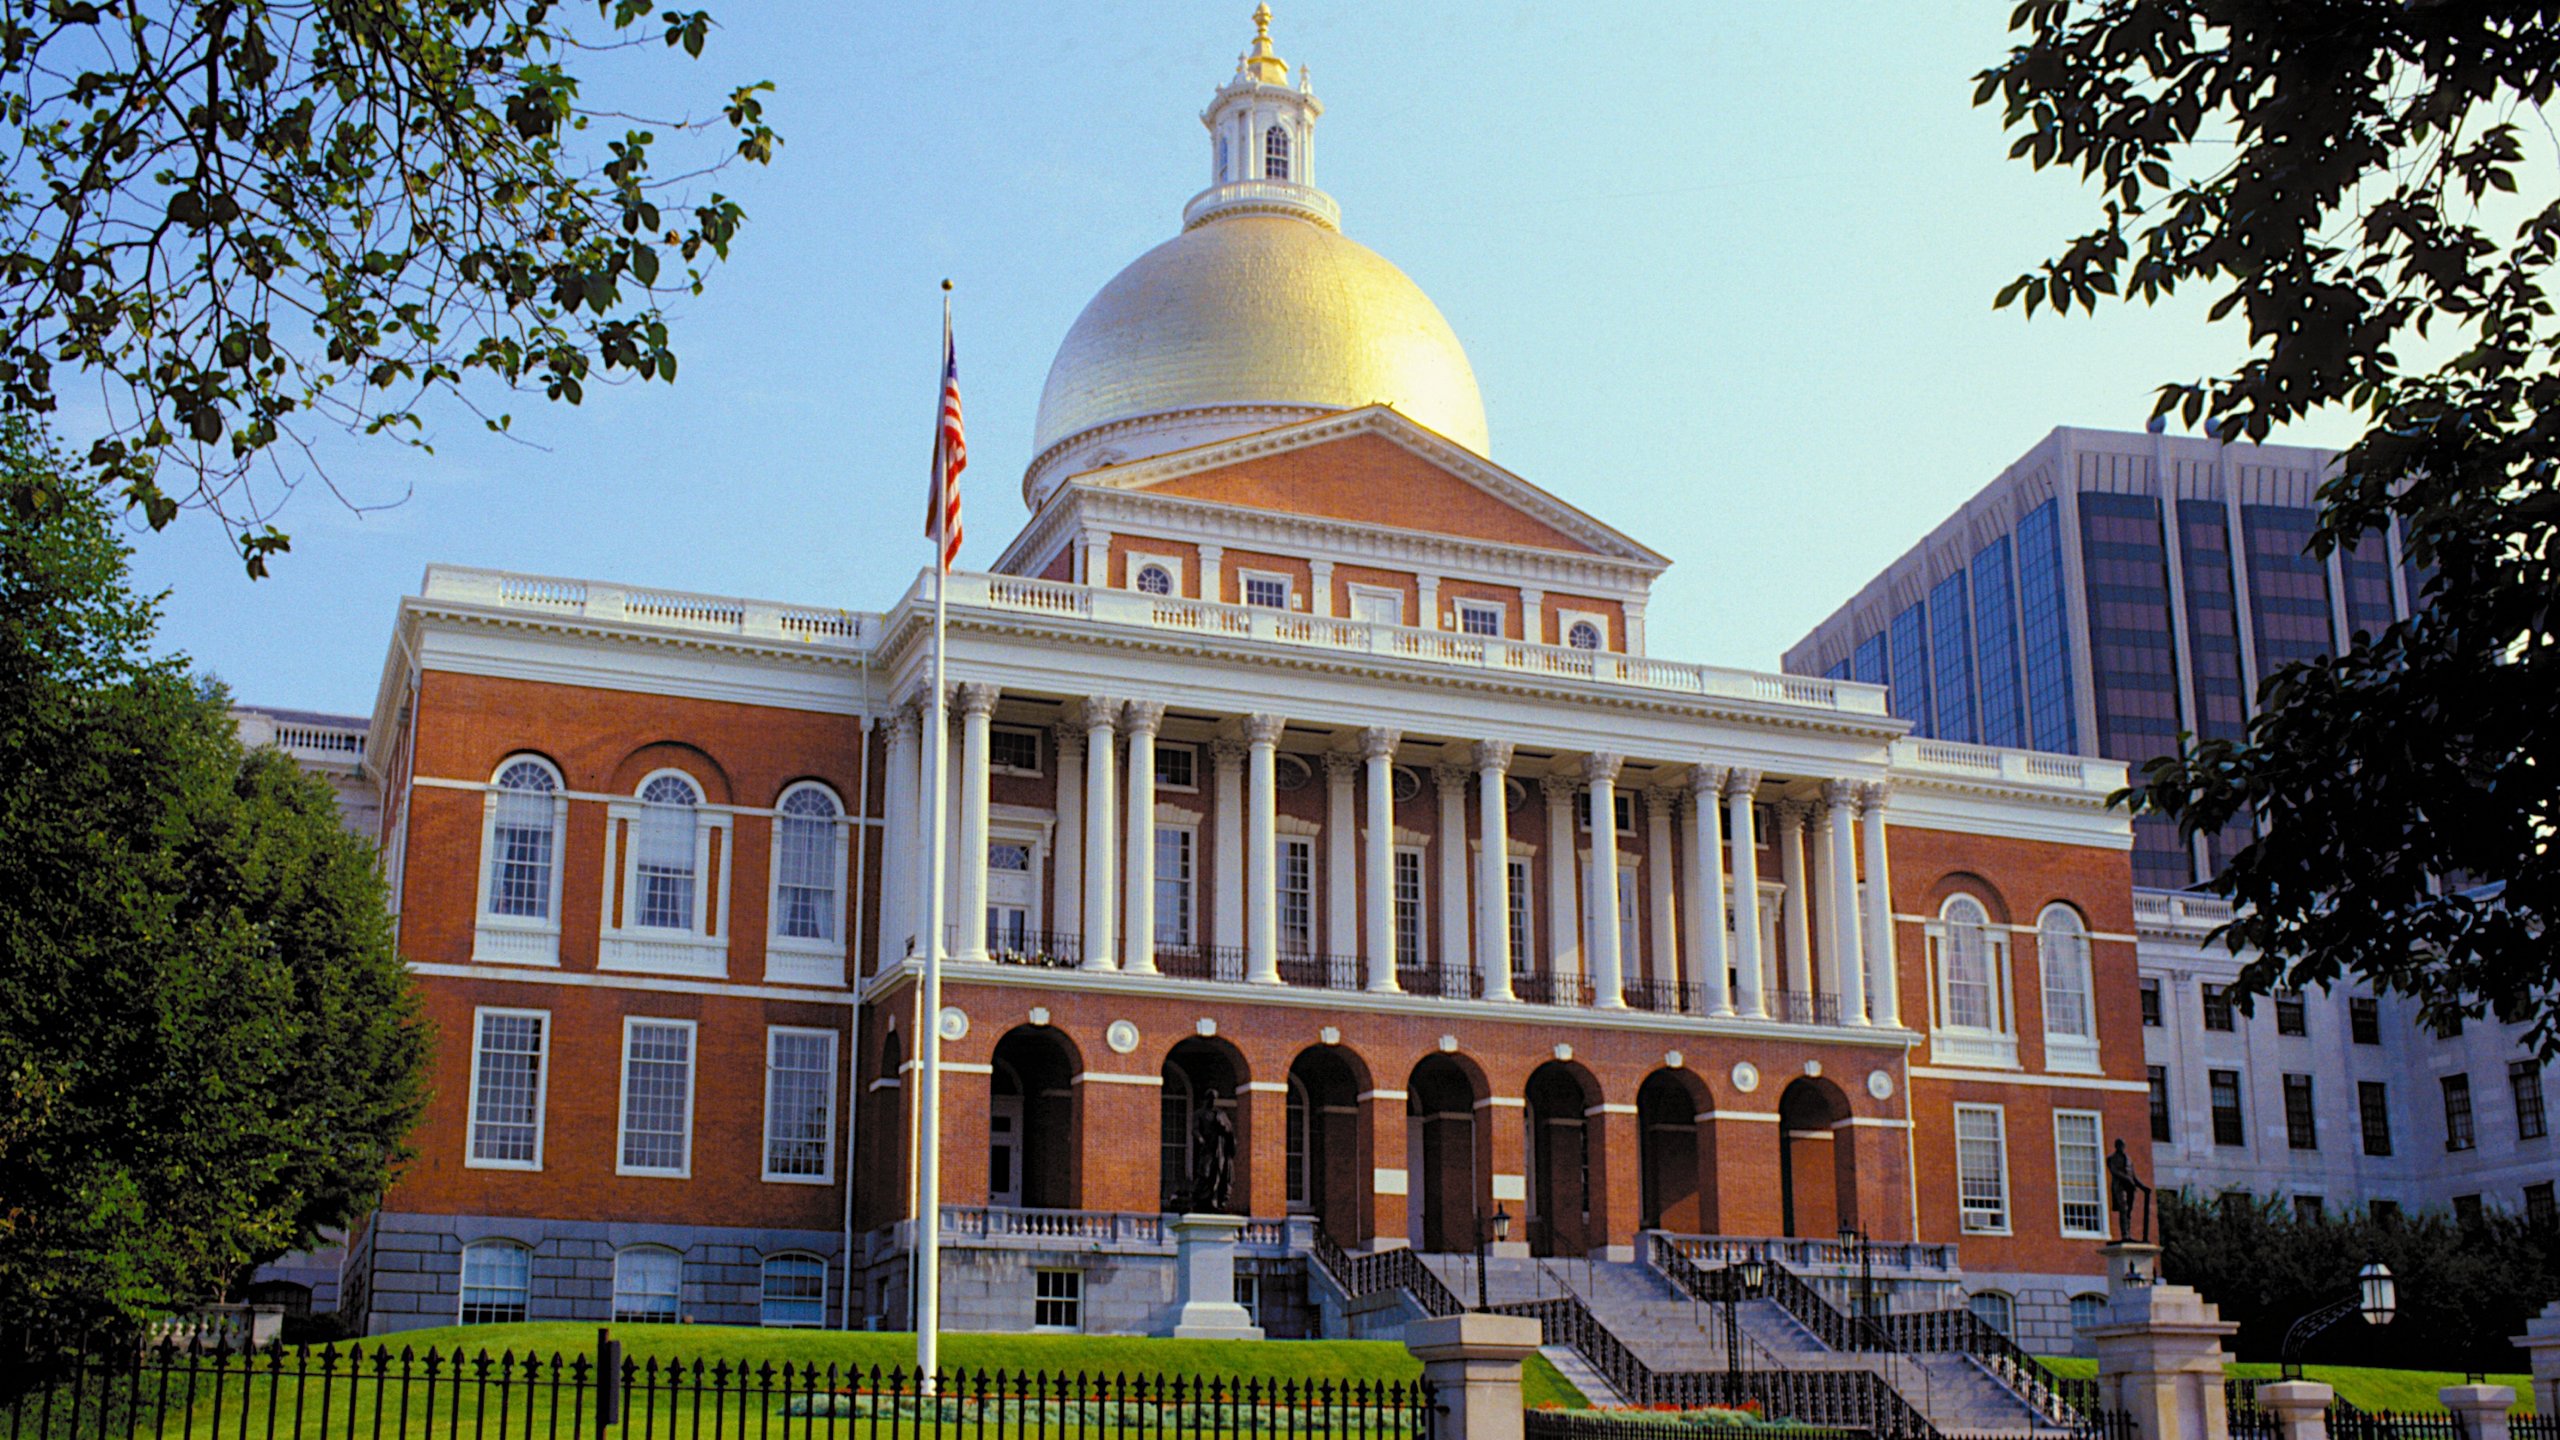 Massachusetts State House, Boston, Massachusetts, US